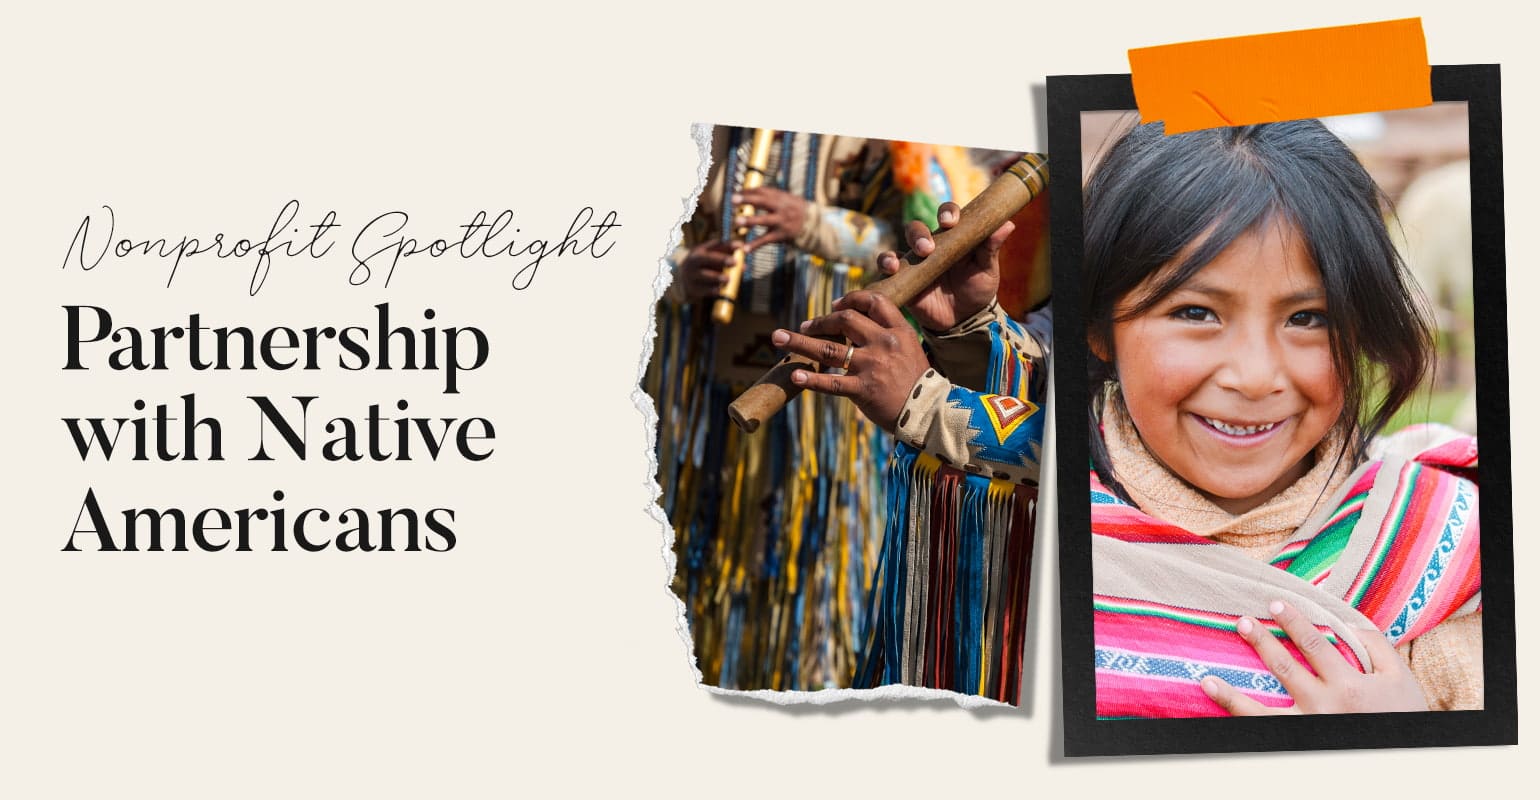 Partnership with Native Americans: Nonprofit Spotlight